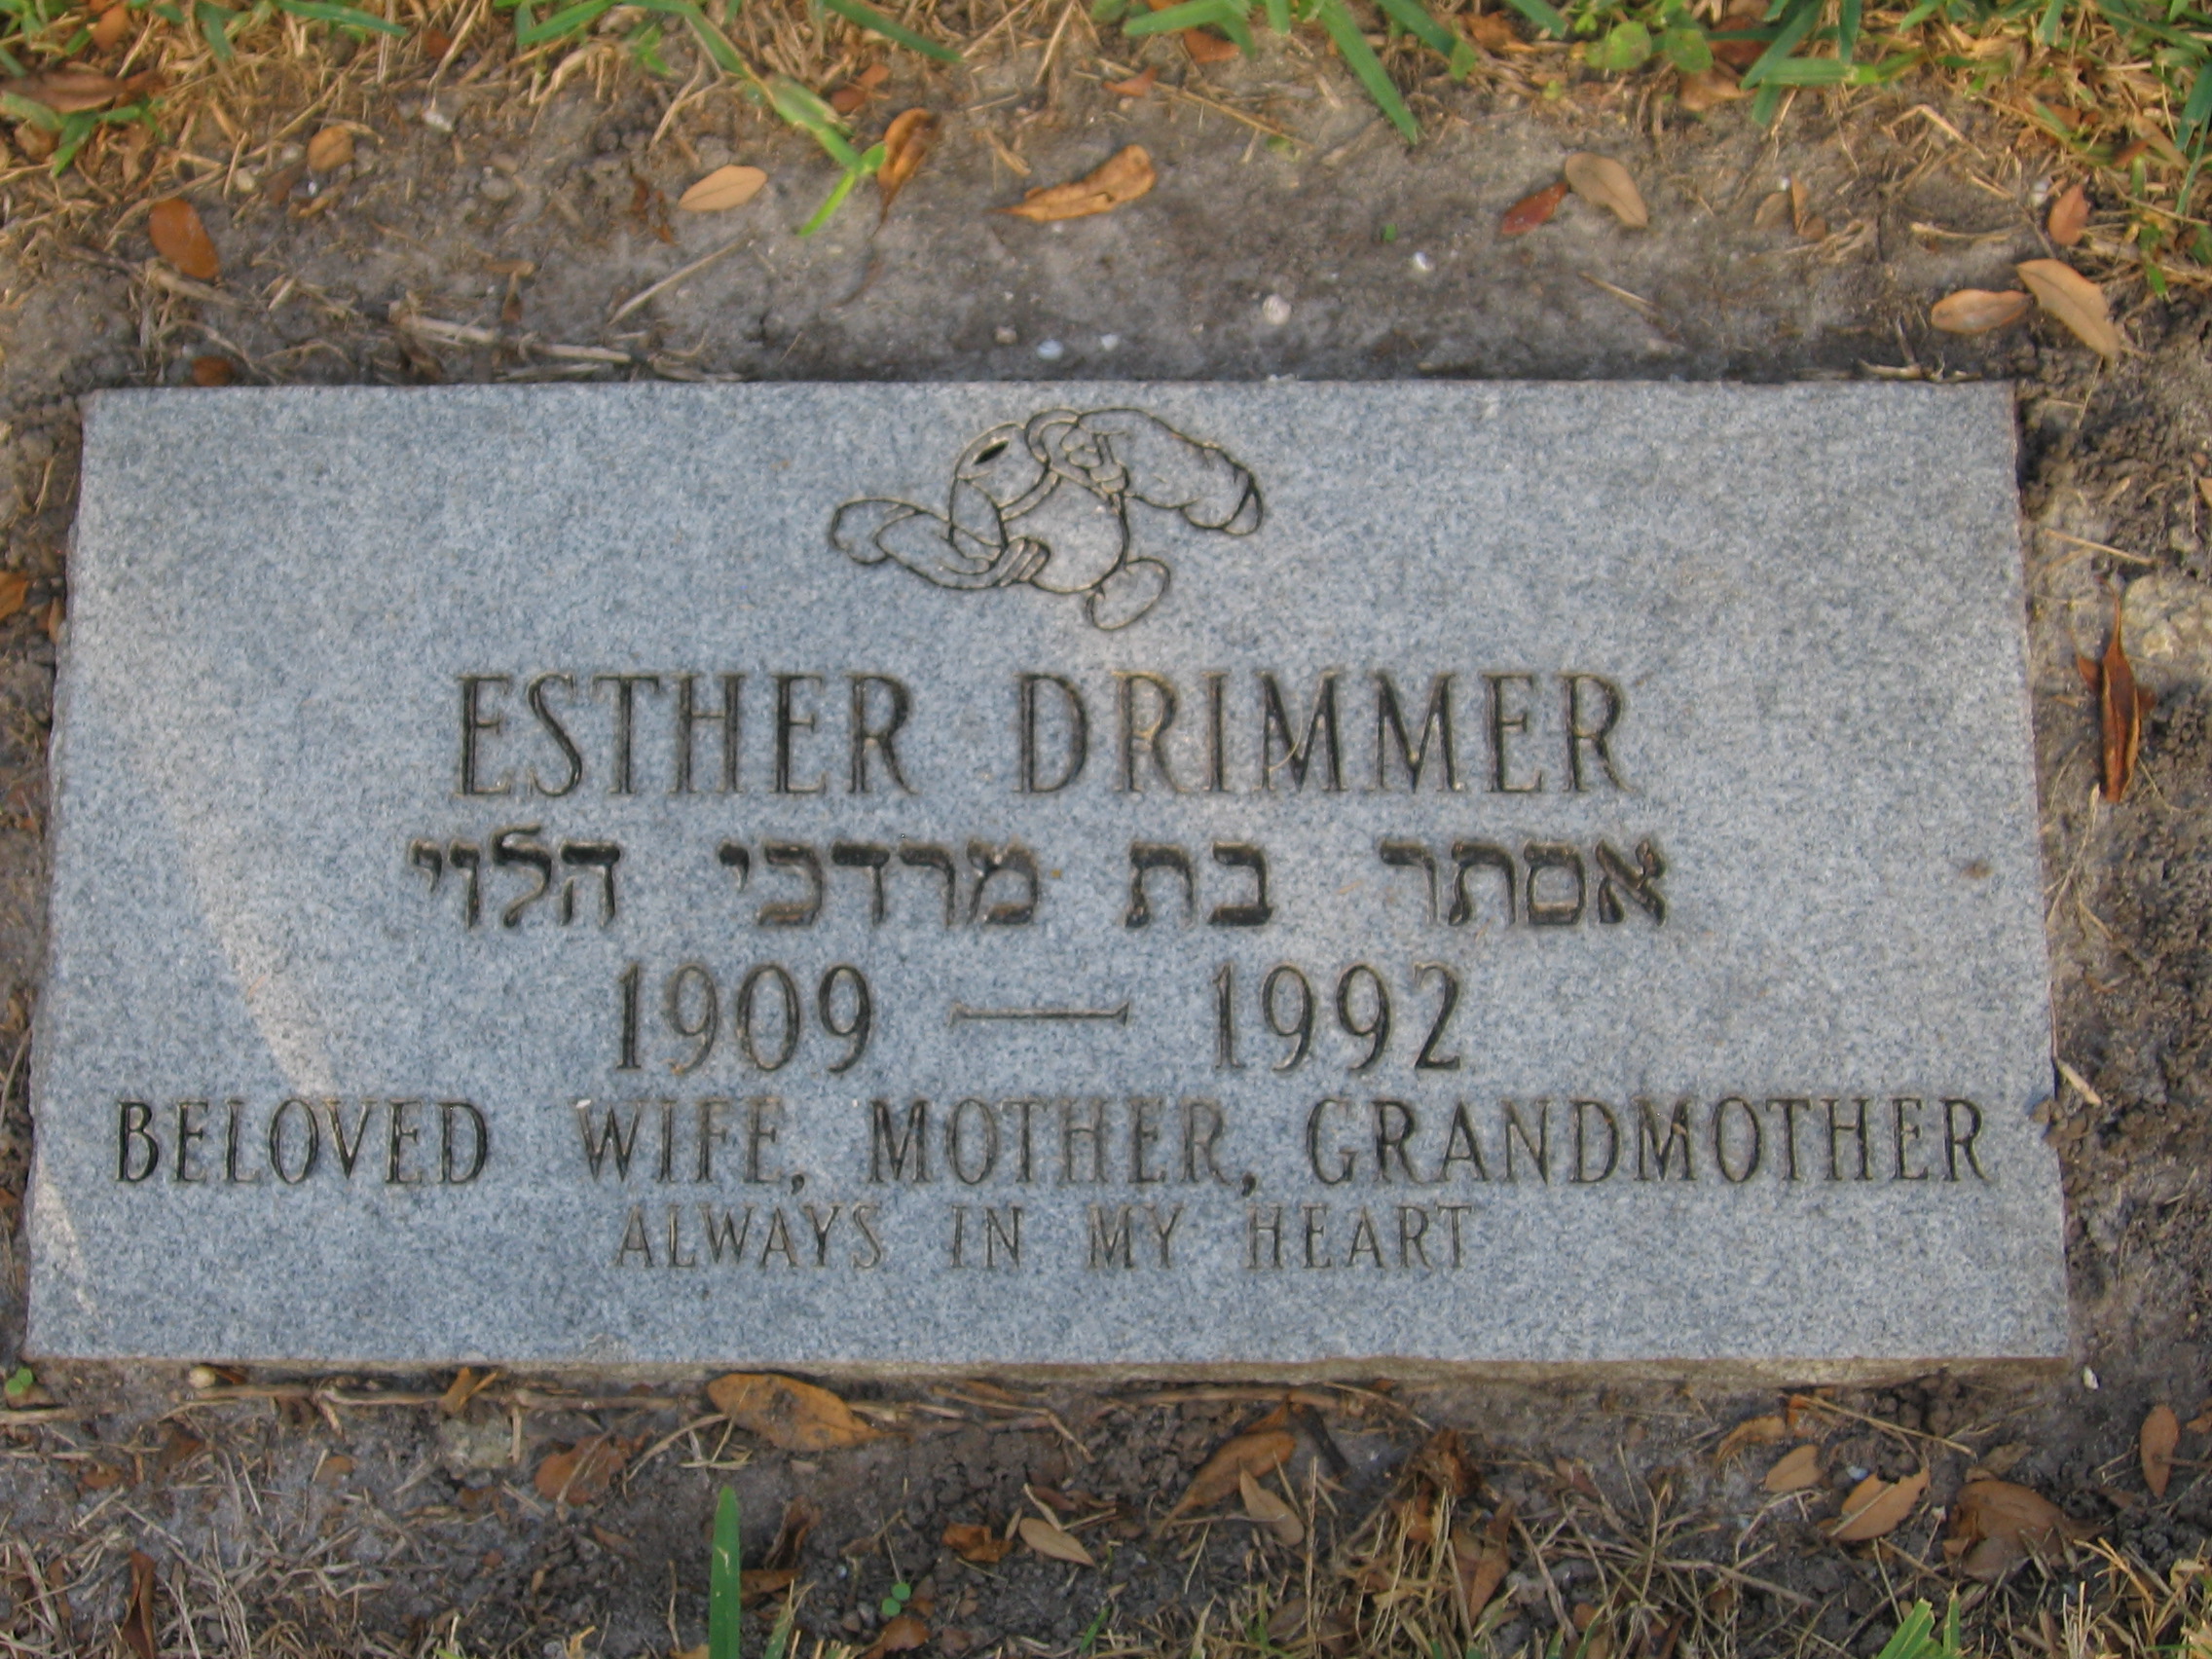 Esther Drimmer